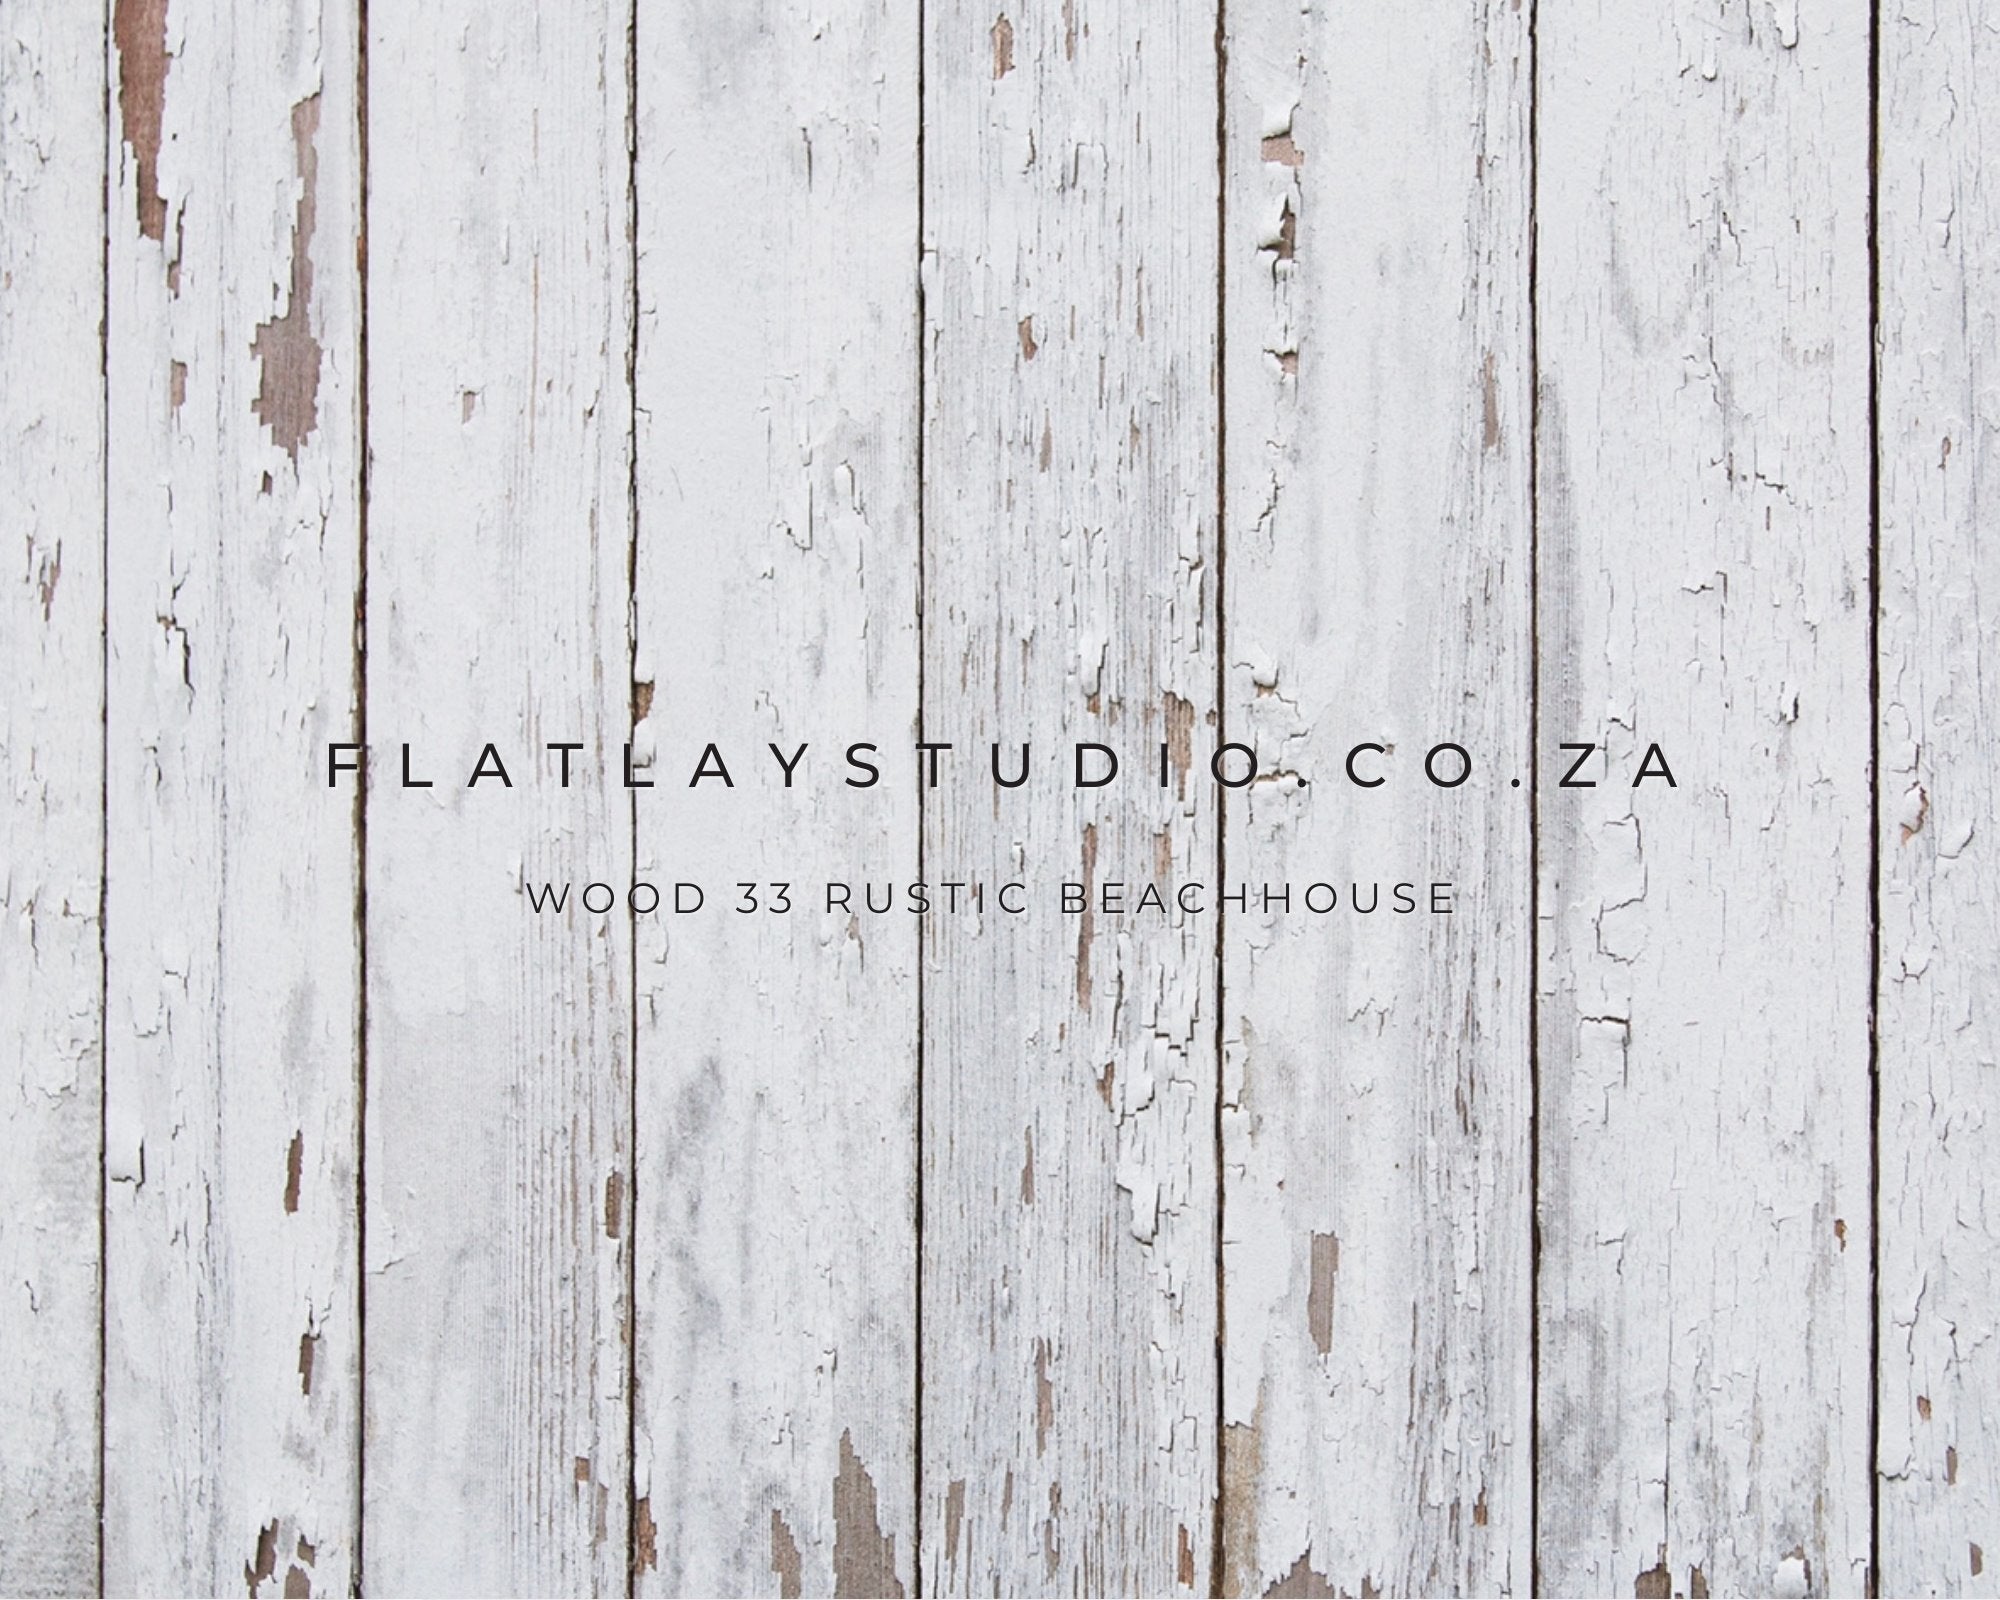 Wood 33 Rustic Beachhouse - FlatlayStudio Flatlay Styling Board